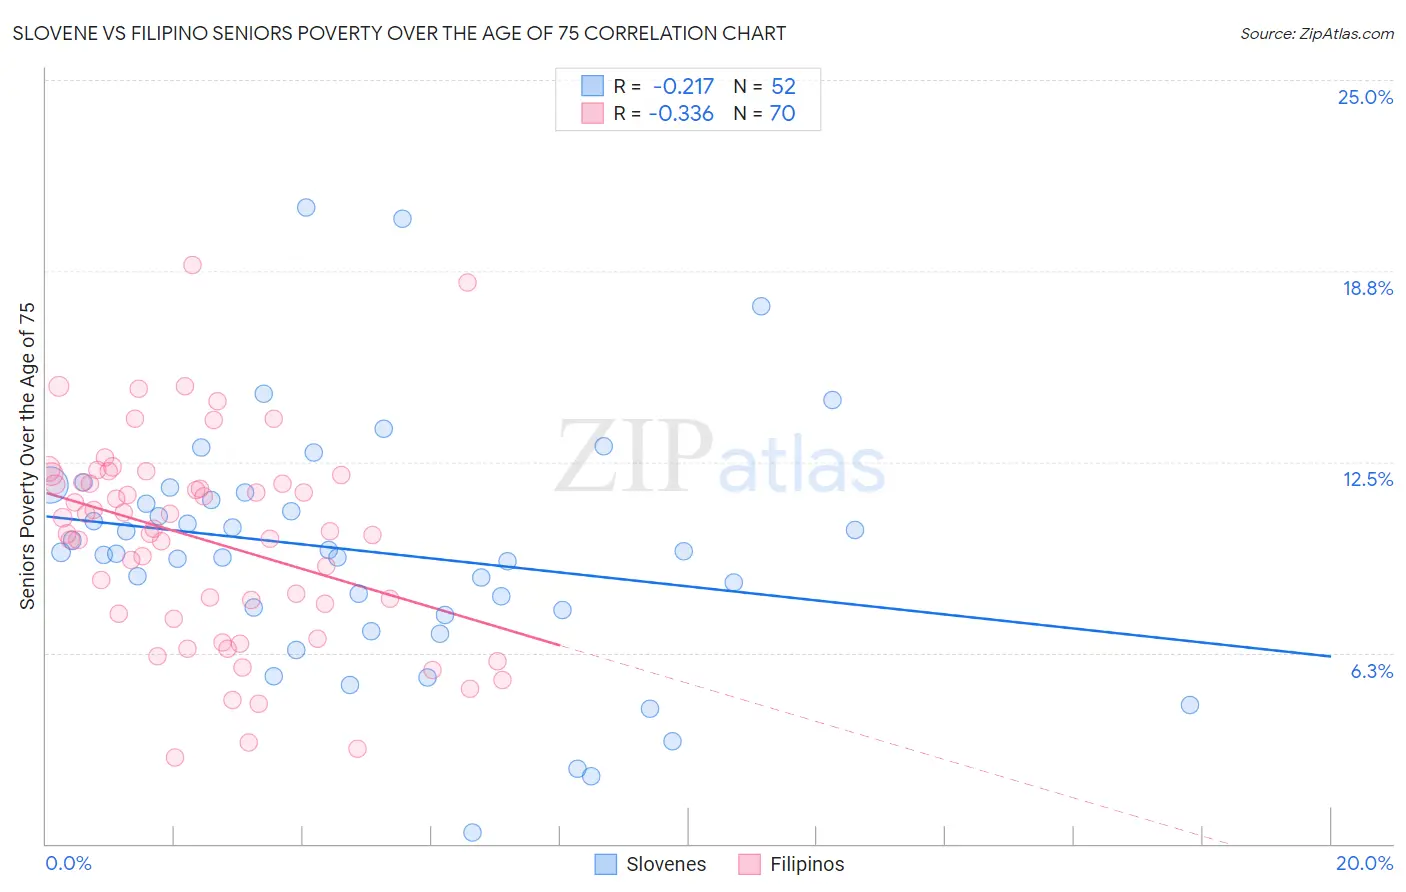 Slovene vs Filipino Seniors Poverty Over the Age of 75